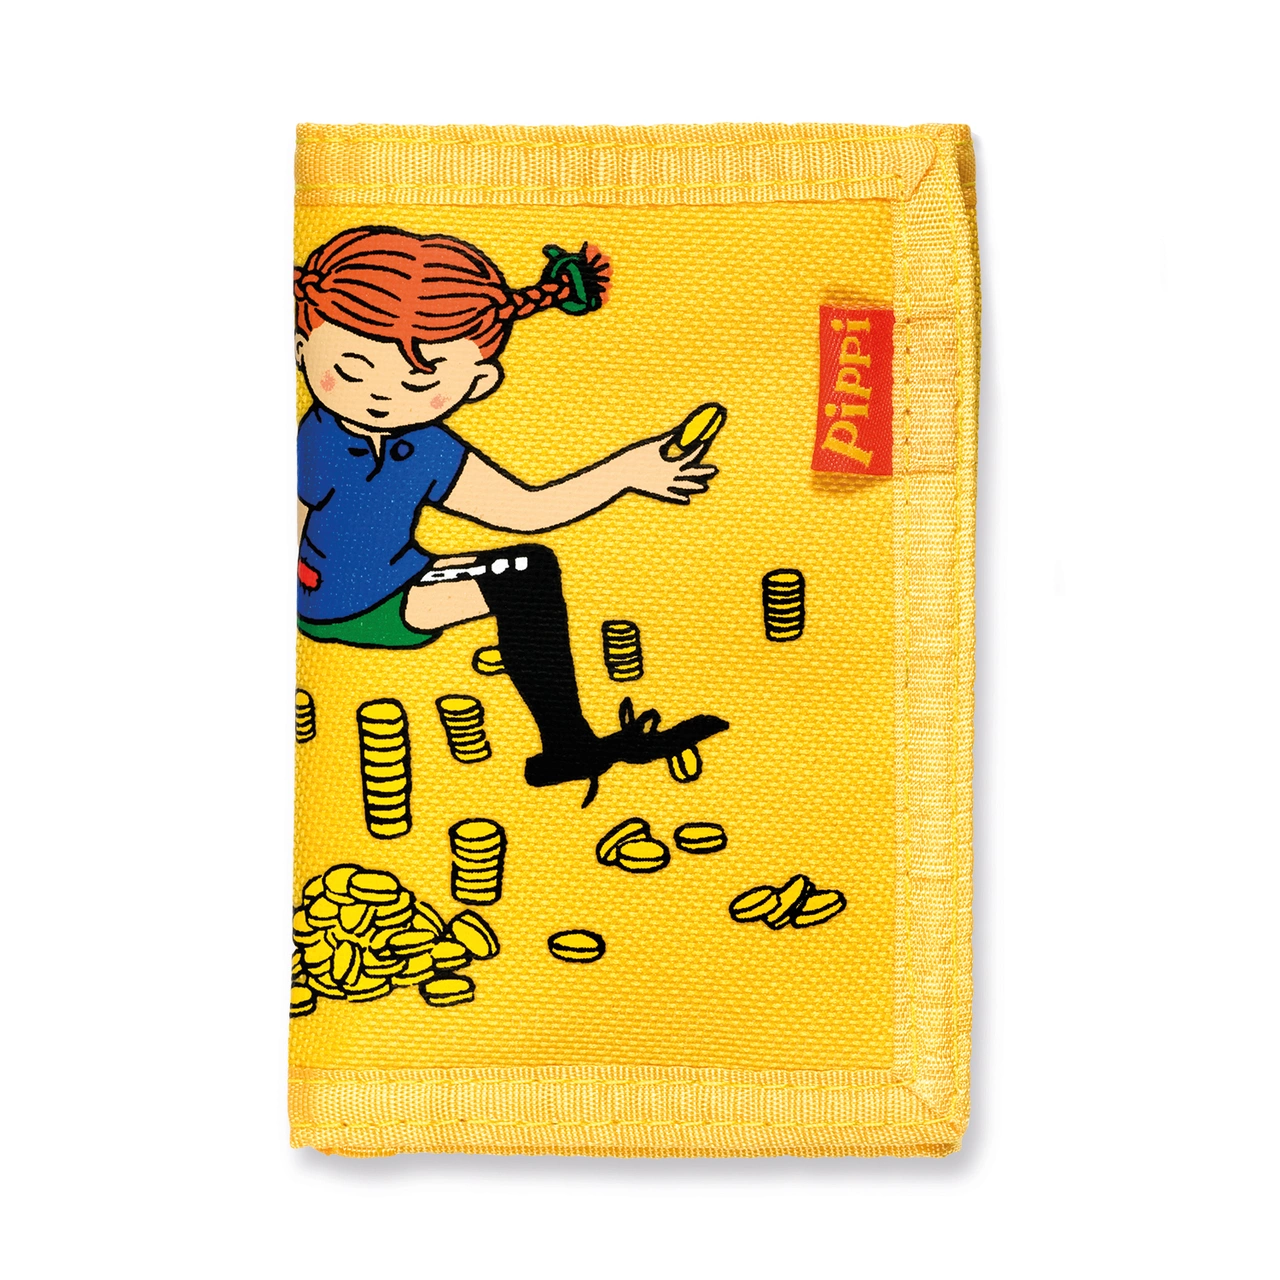 Plånbok gul - Pippi Longstocking